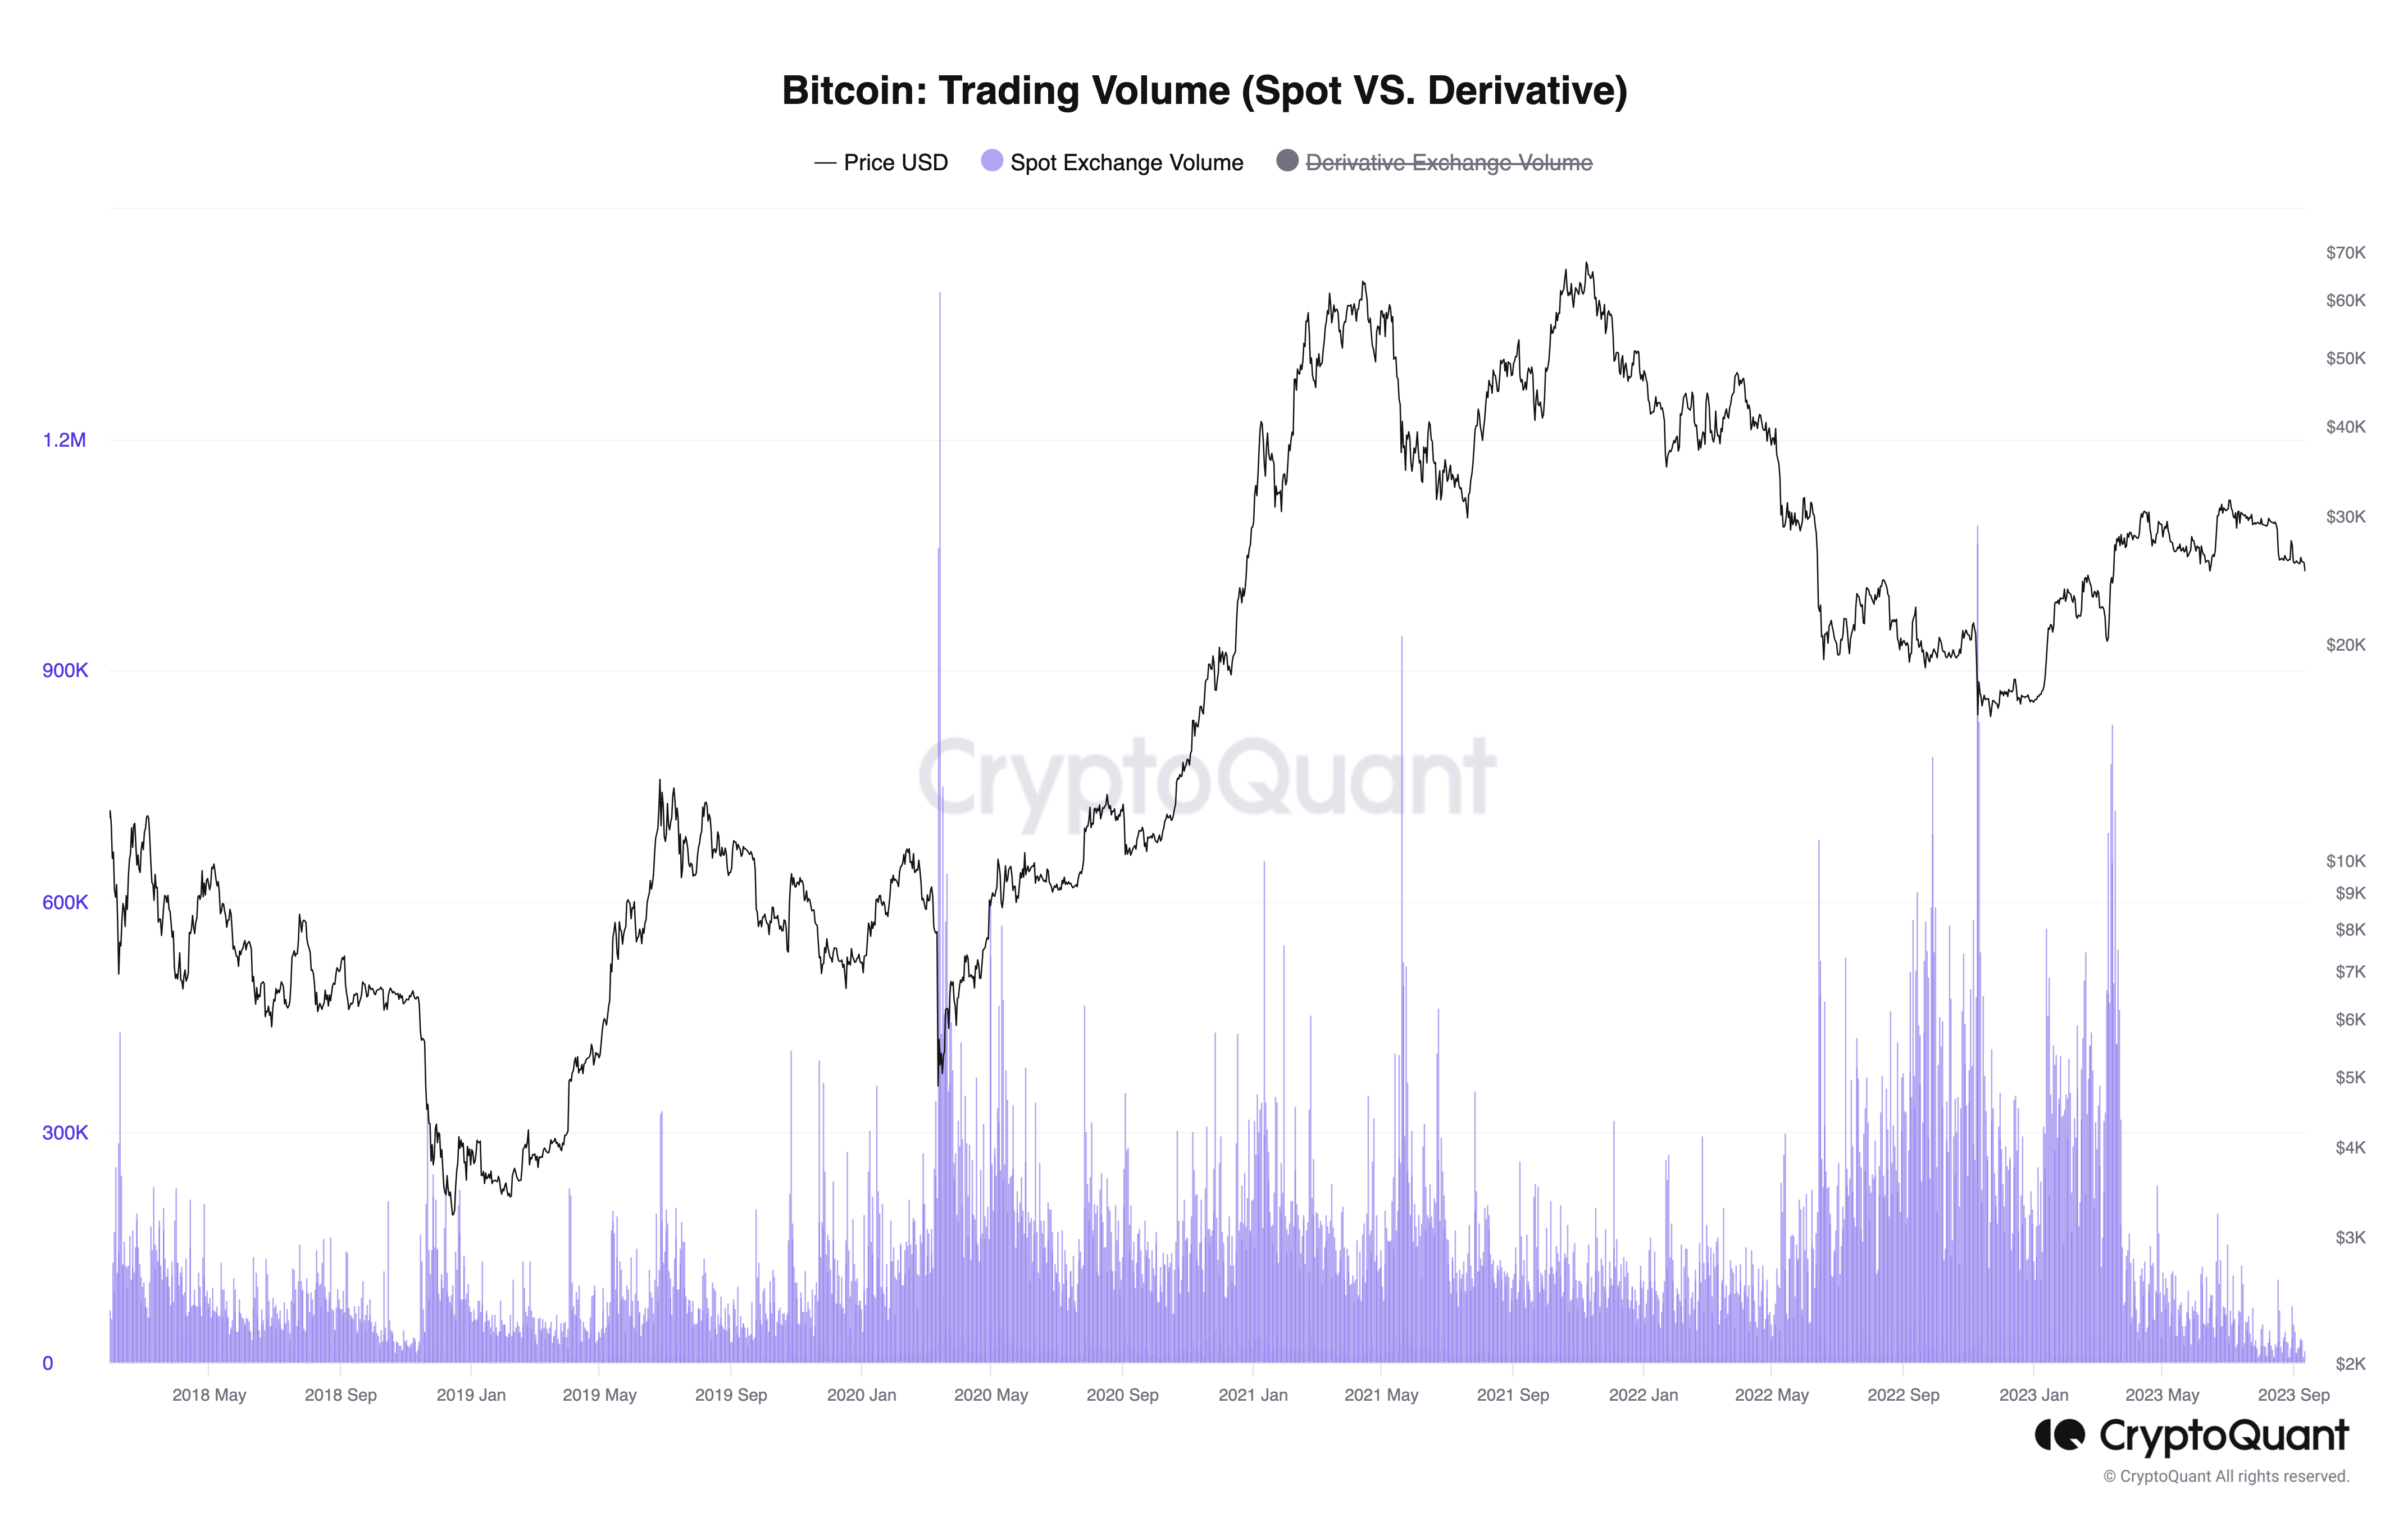 Bitcoin: Trading Volume (Spot vs. Derivative) chart. Source: CryptoQuant